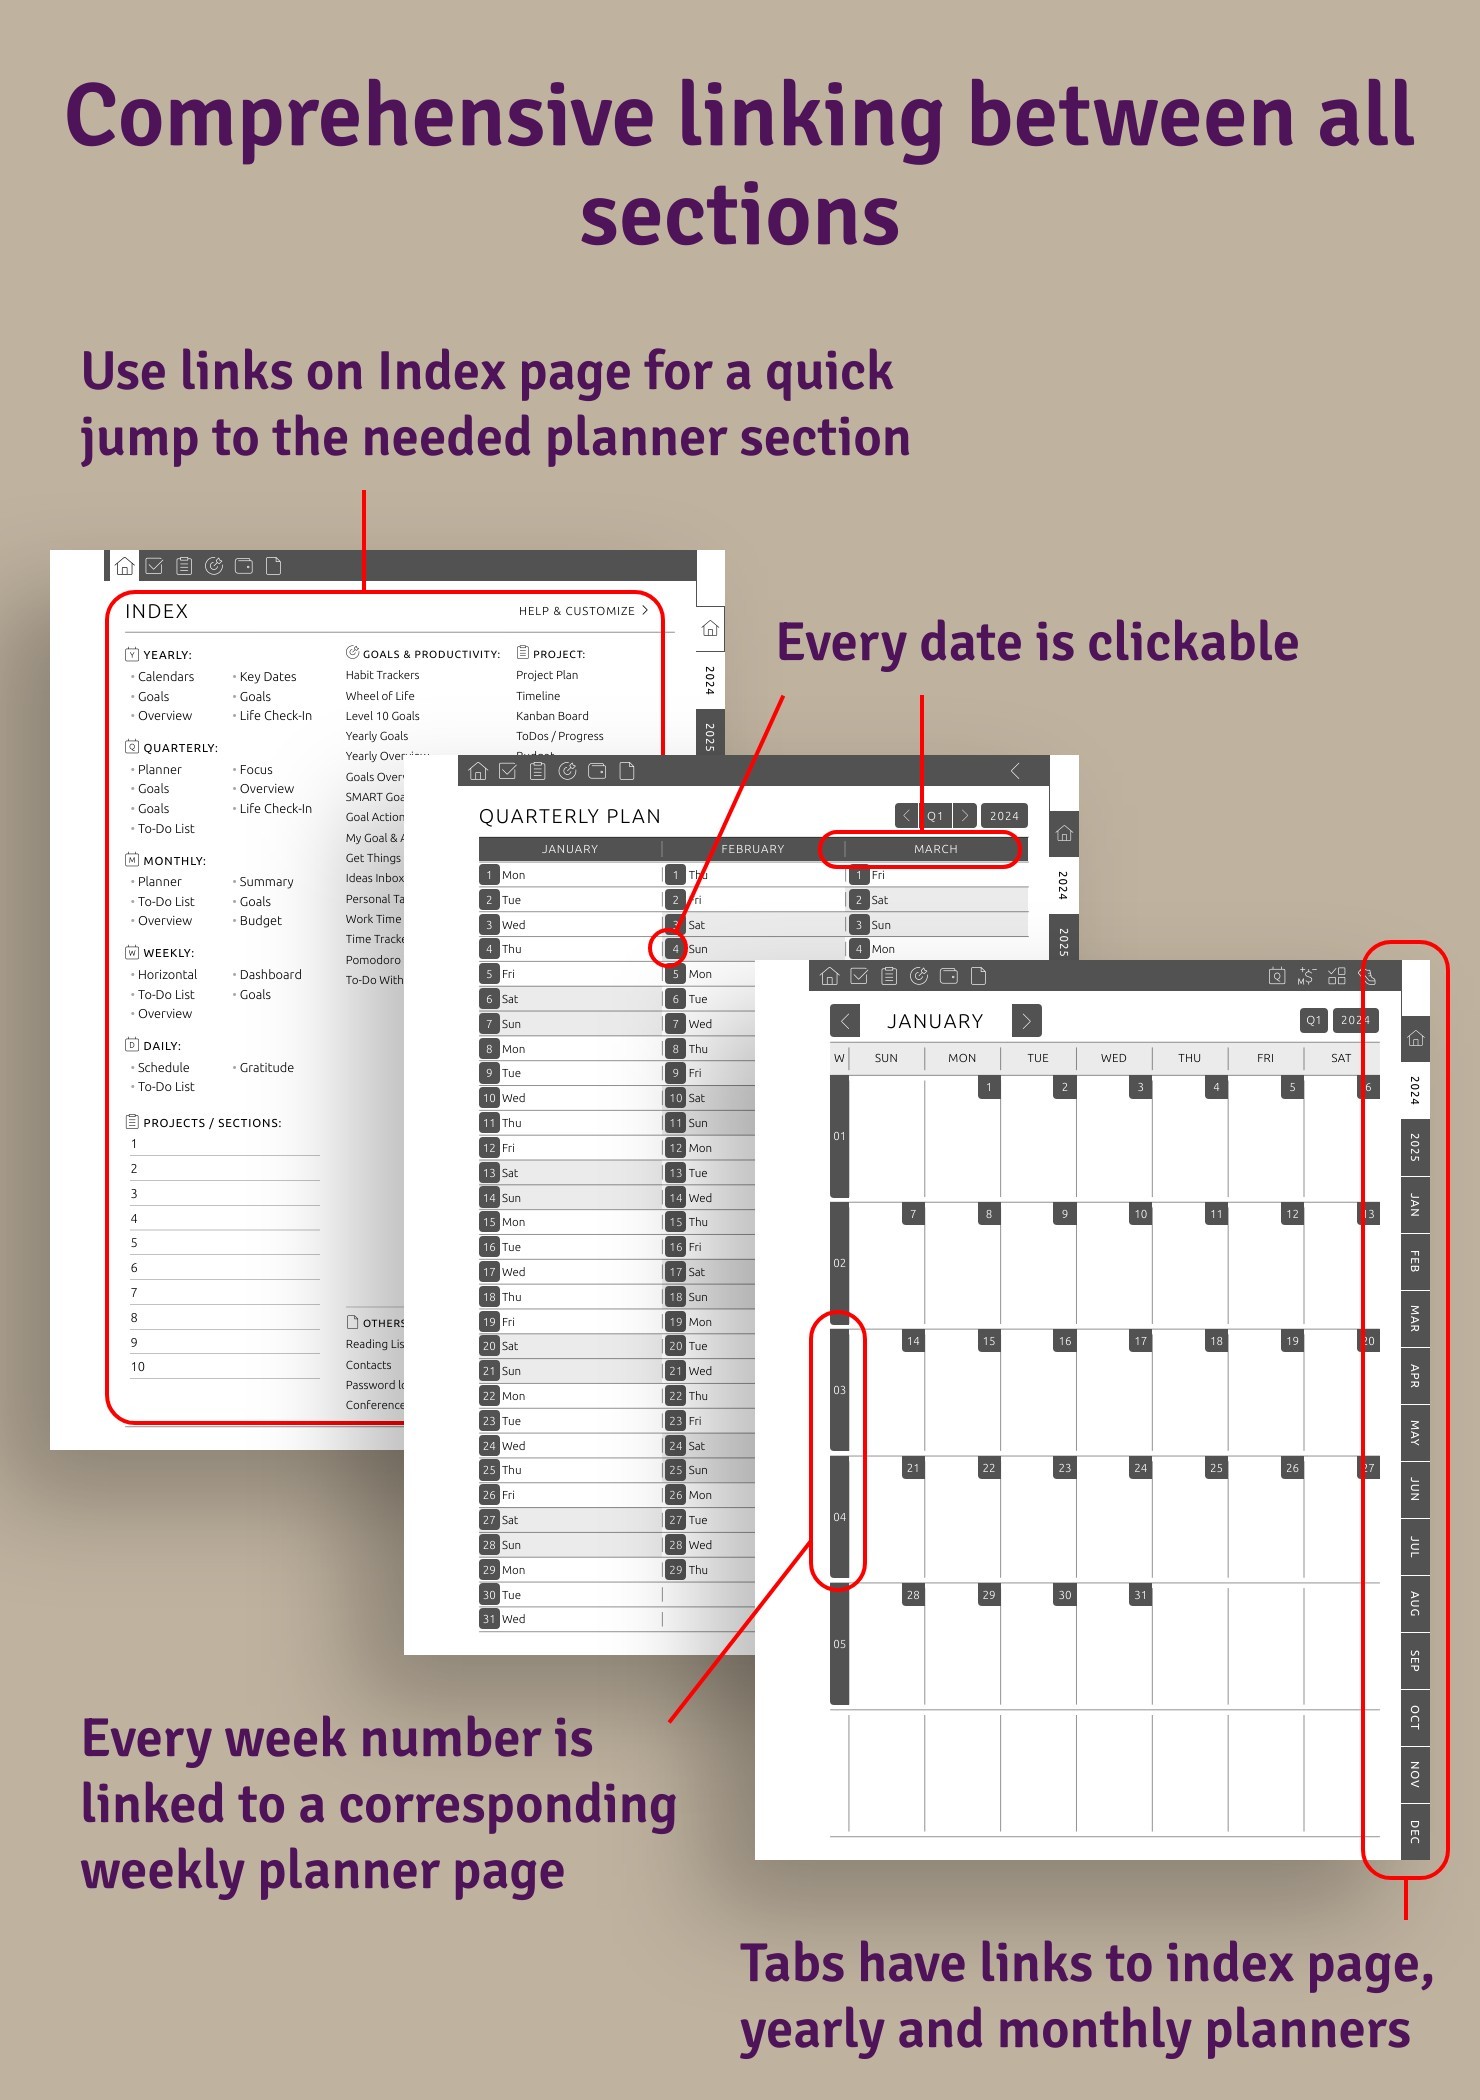 Free linked pdf planner for the Kindle Scribe (Nov-Dec 2023) :  r/kindlescribe